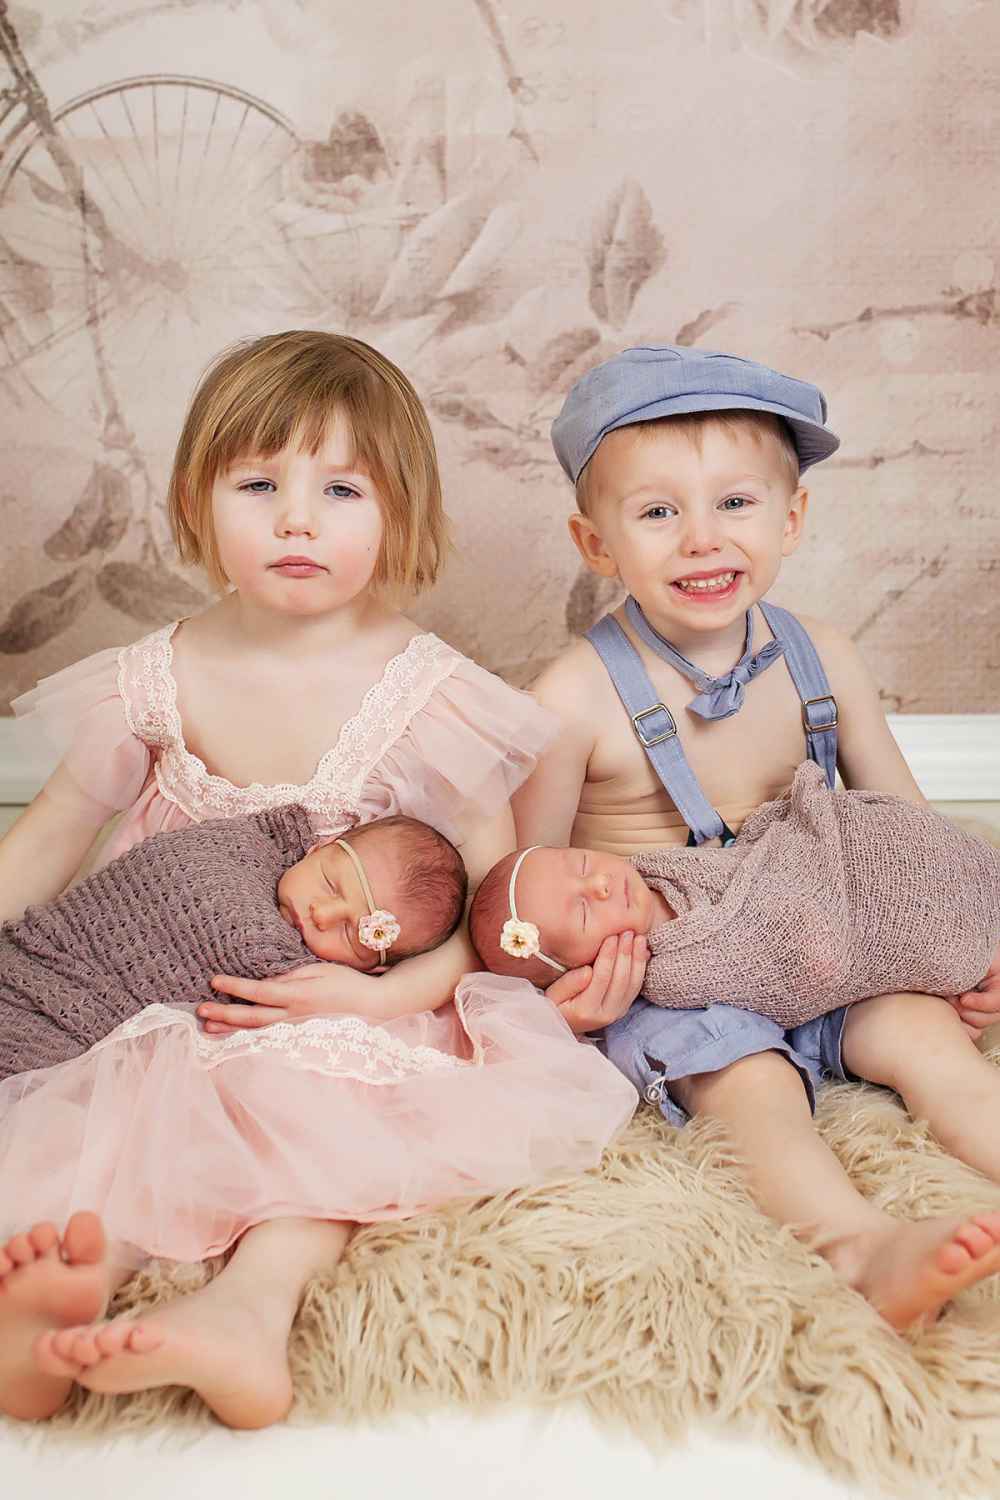 Toddler Twins Cuddling Their Newborn Twin Siblings bored